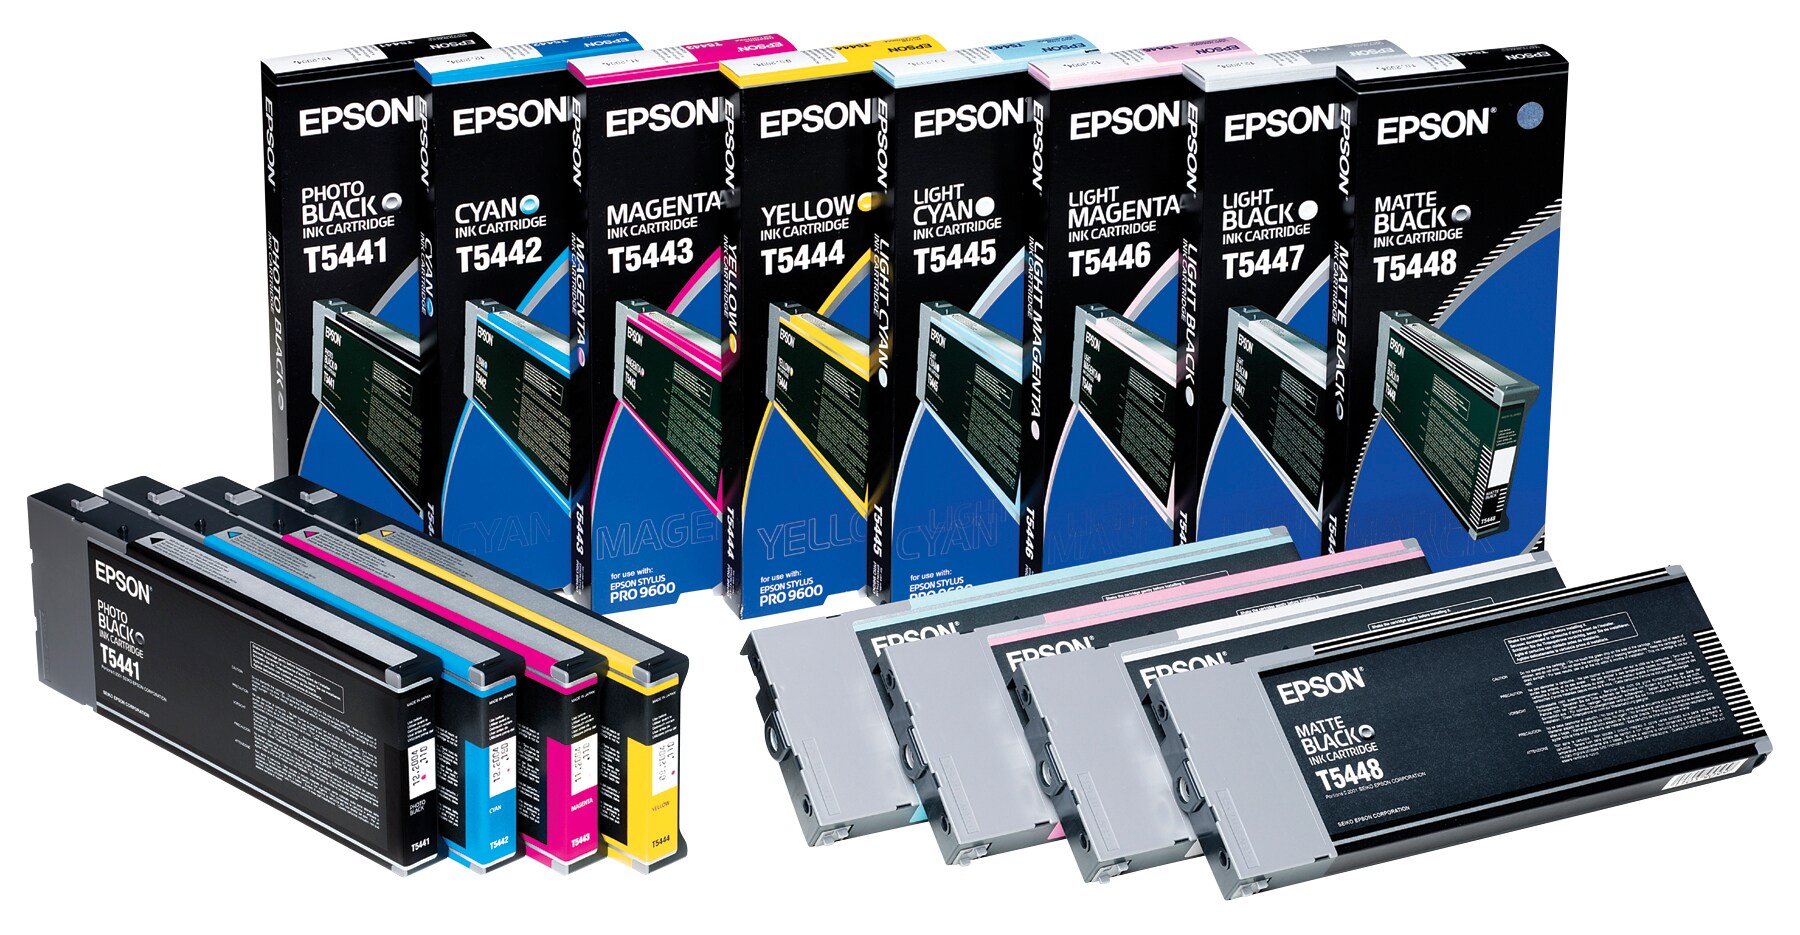 Epson UltraChrome Photo Black Ink Cartridge